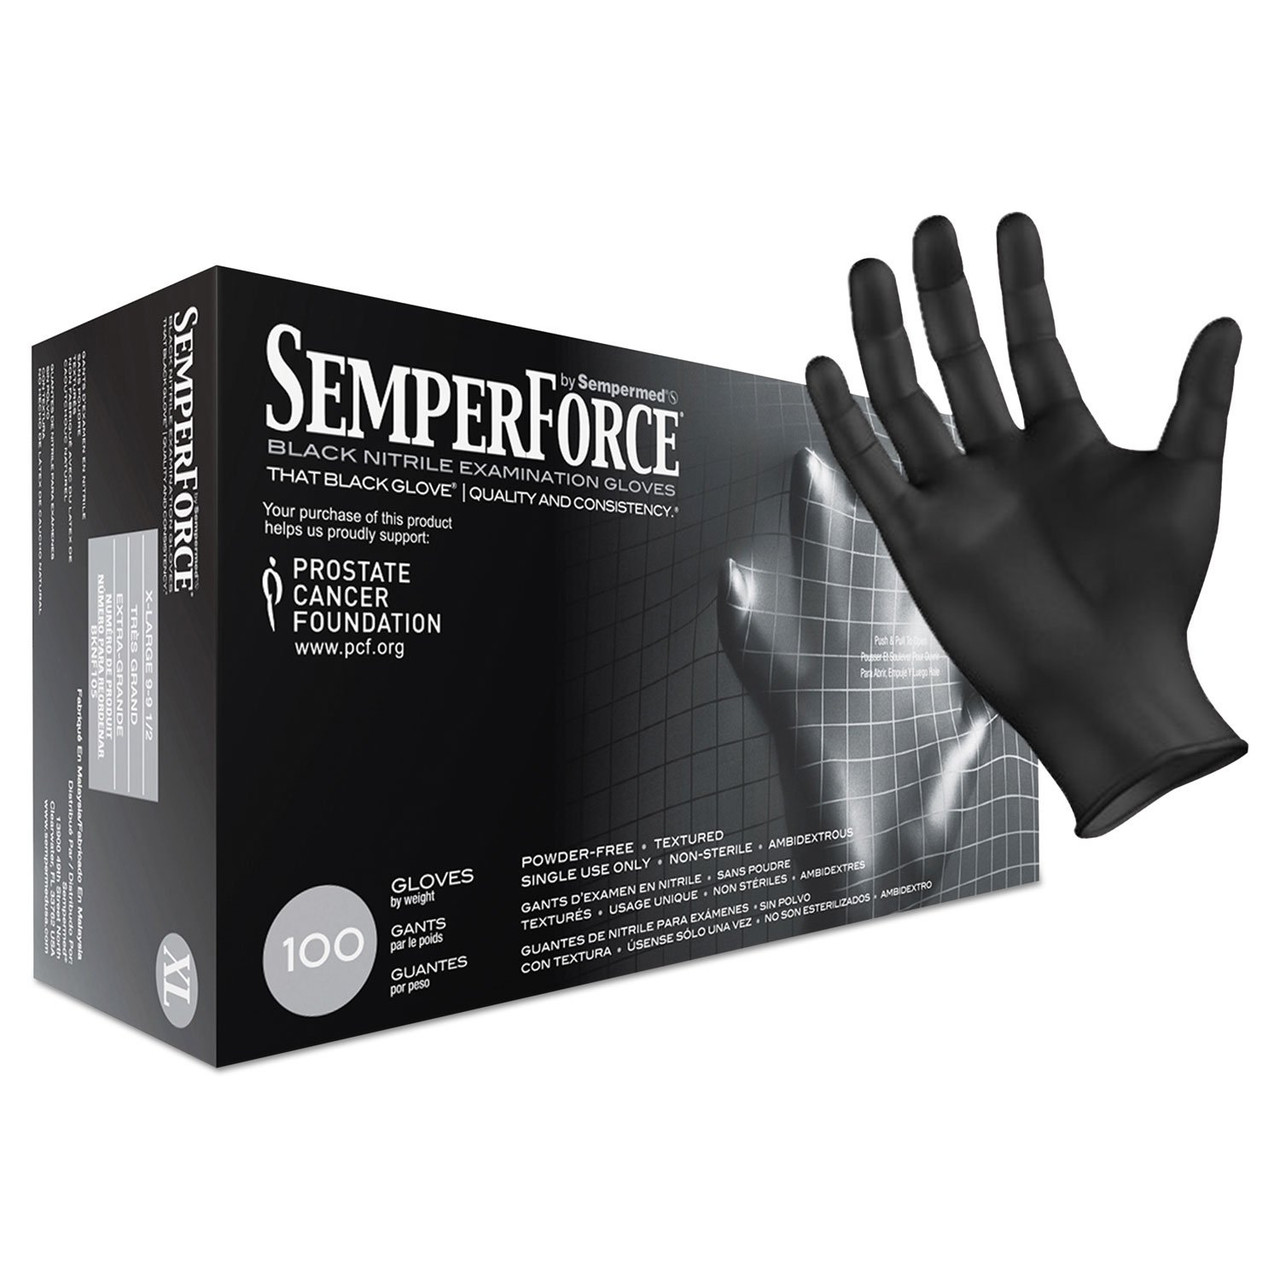 SemperForce 4mil Black Nitrile Exam Gloves Box of 100 - BKNF105